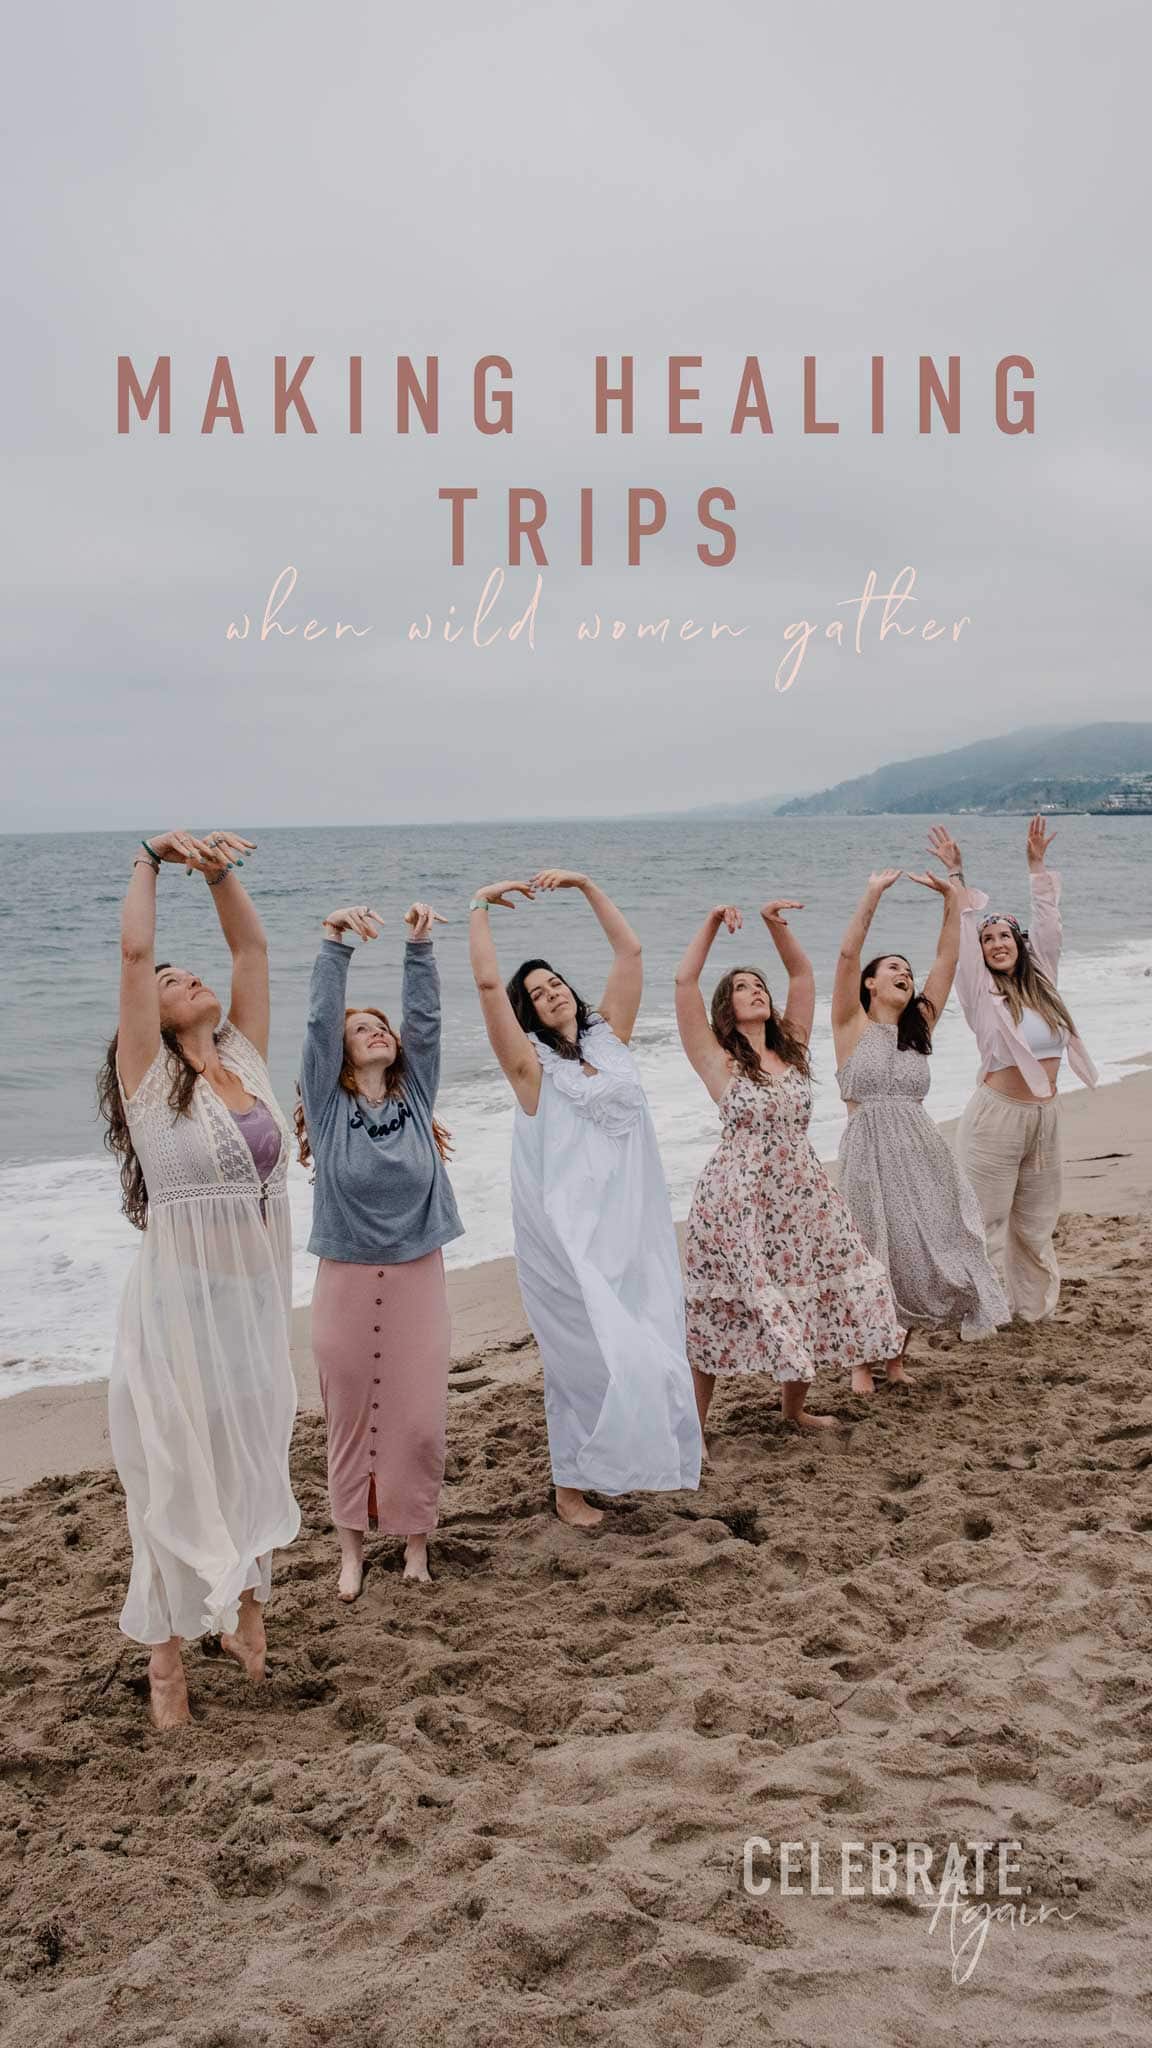 "a healing trip when wild women gather" women dancing on a beach